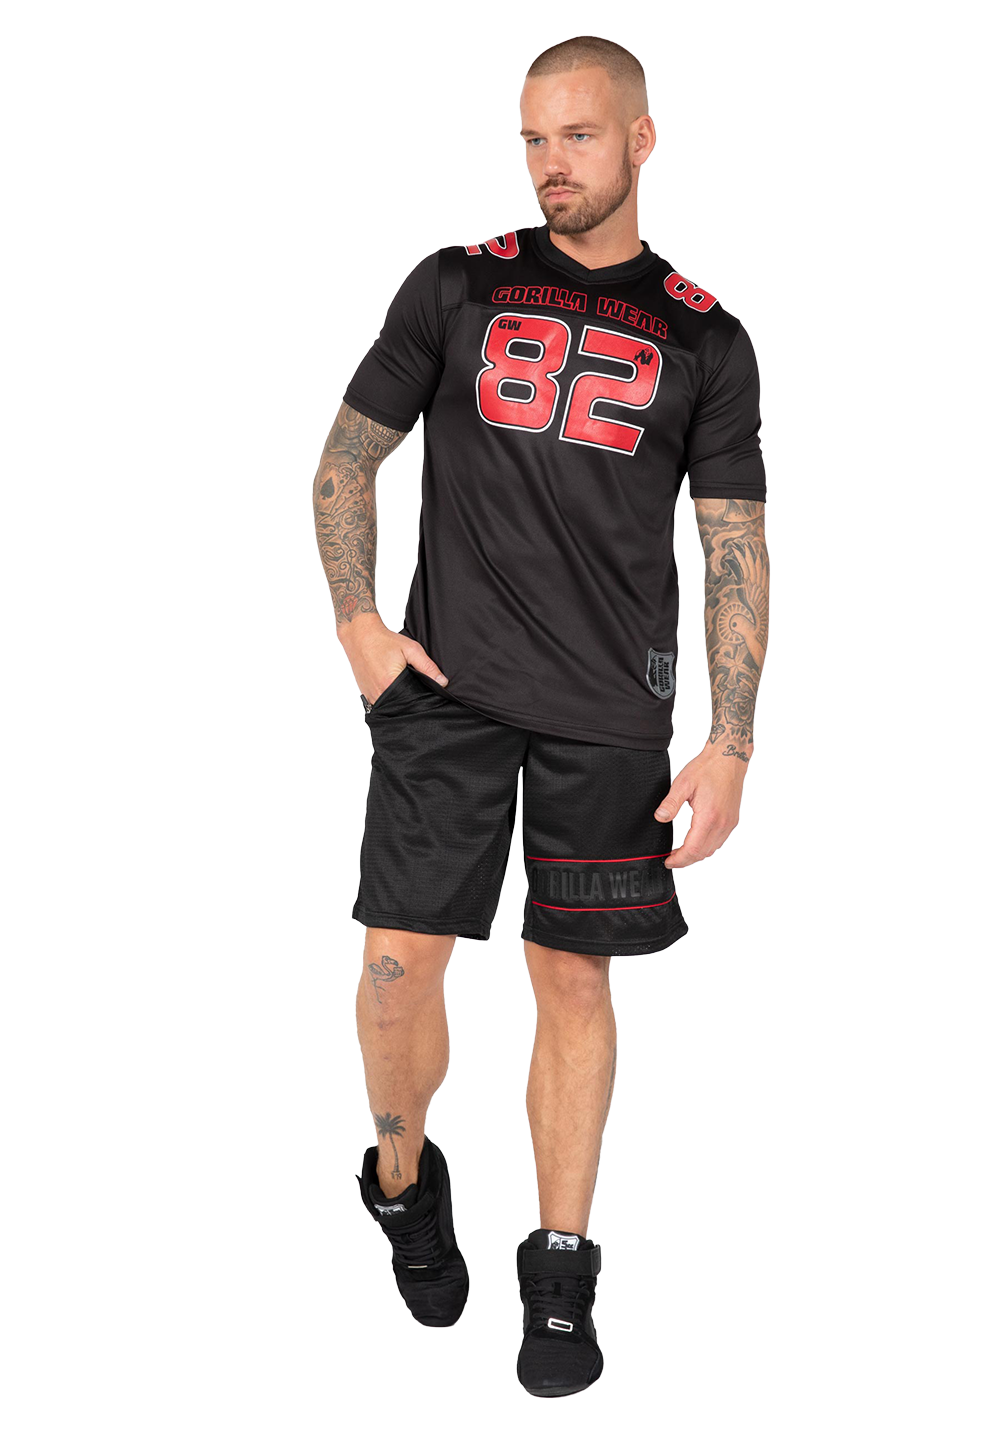 Футболка Fresno T-shirt Black/Red от Gorilla Wear